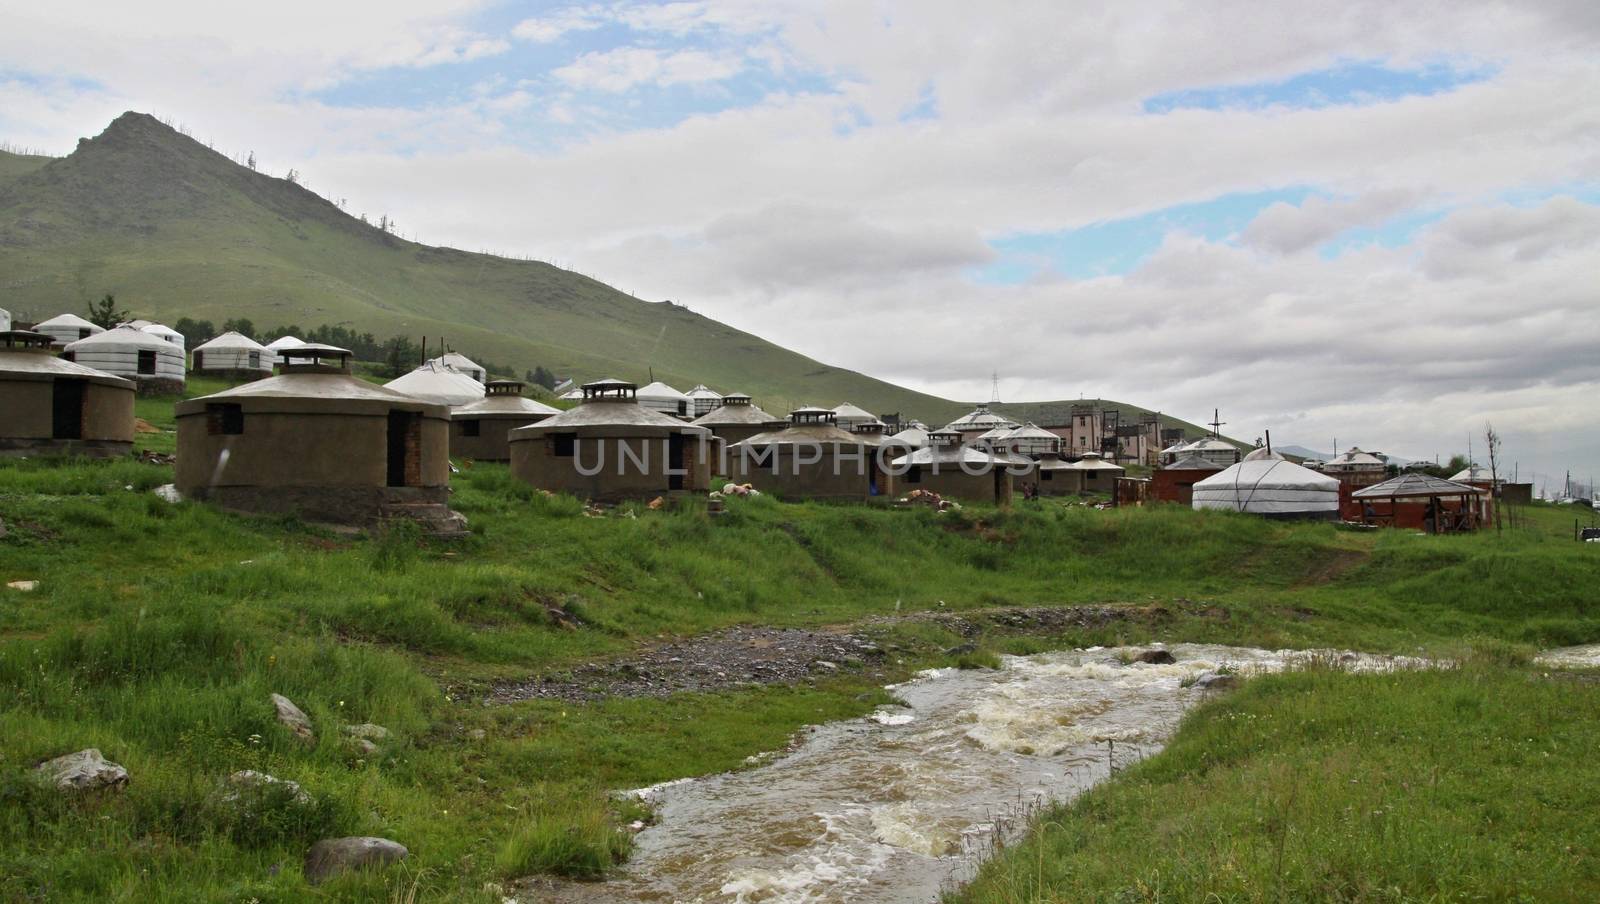 Mongolian Yurts camp near  Ullanbaator in Mongolia by jnerad